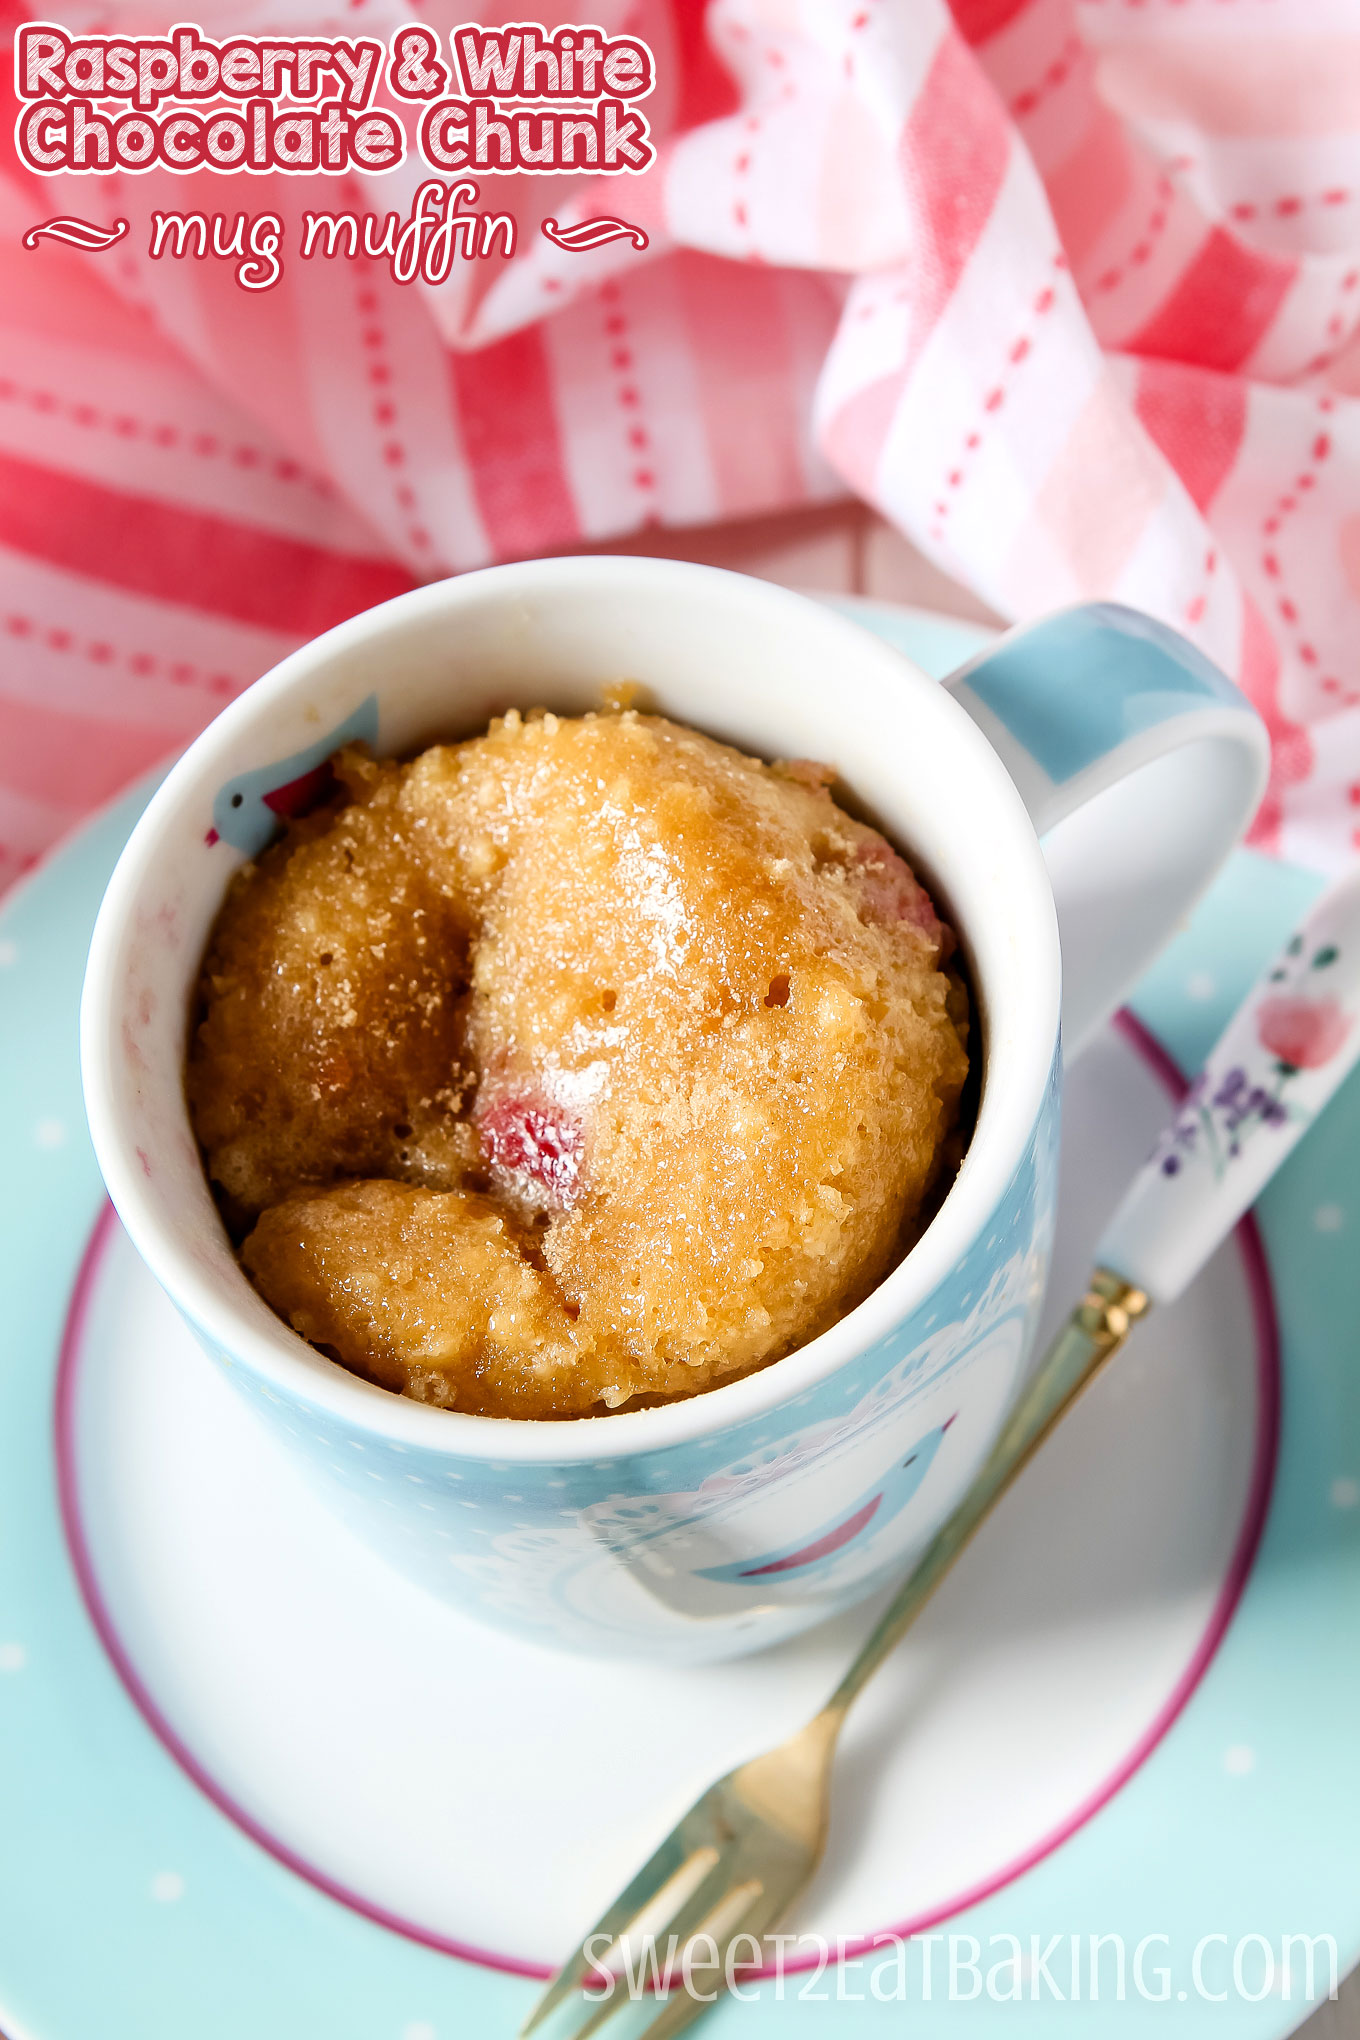 Raspberry & White Chunk Chocolate Mug Muffin Recipe by Sweet2EatBaking.com